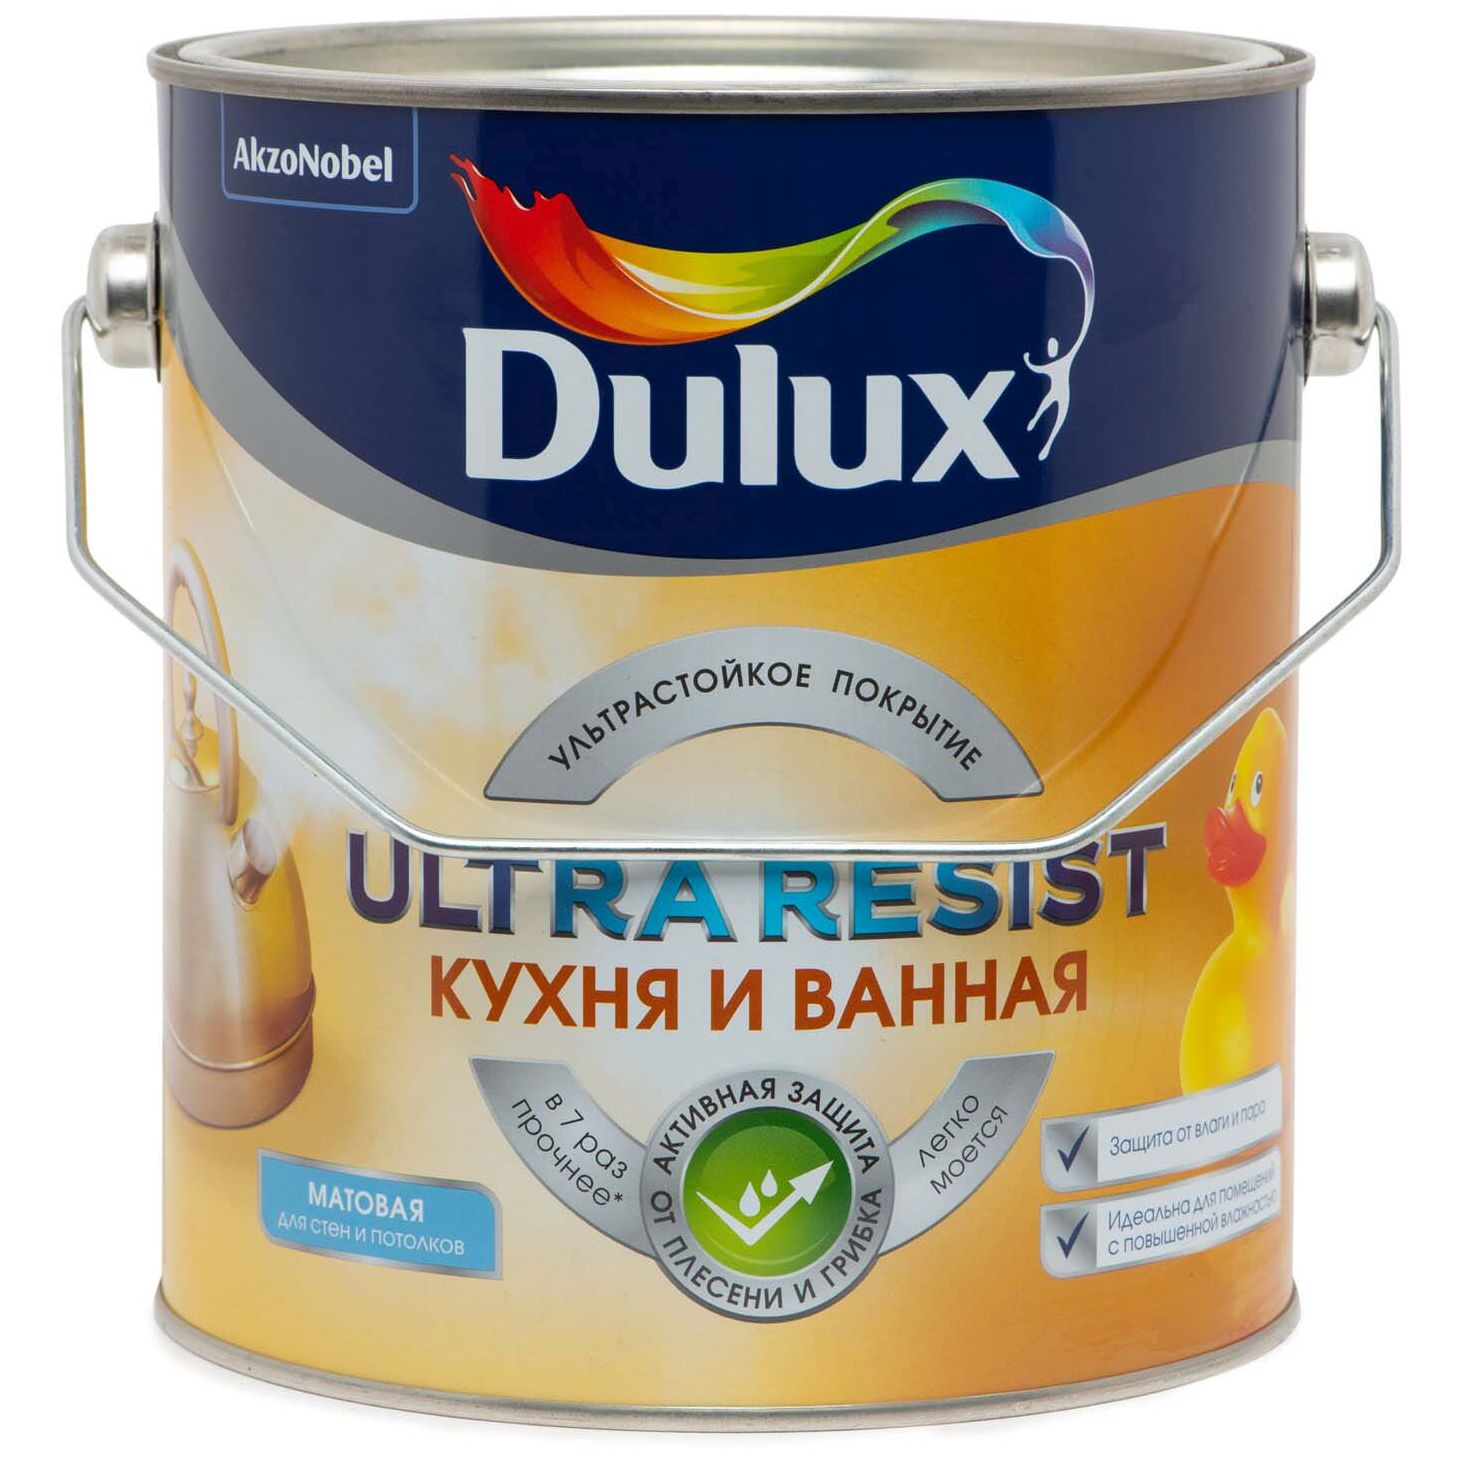 Dulux Ultra resist ванная